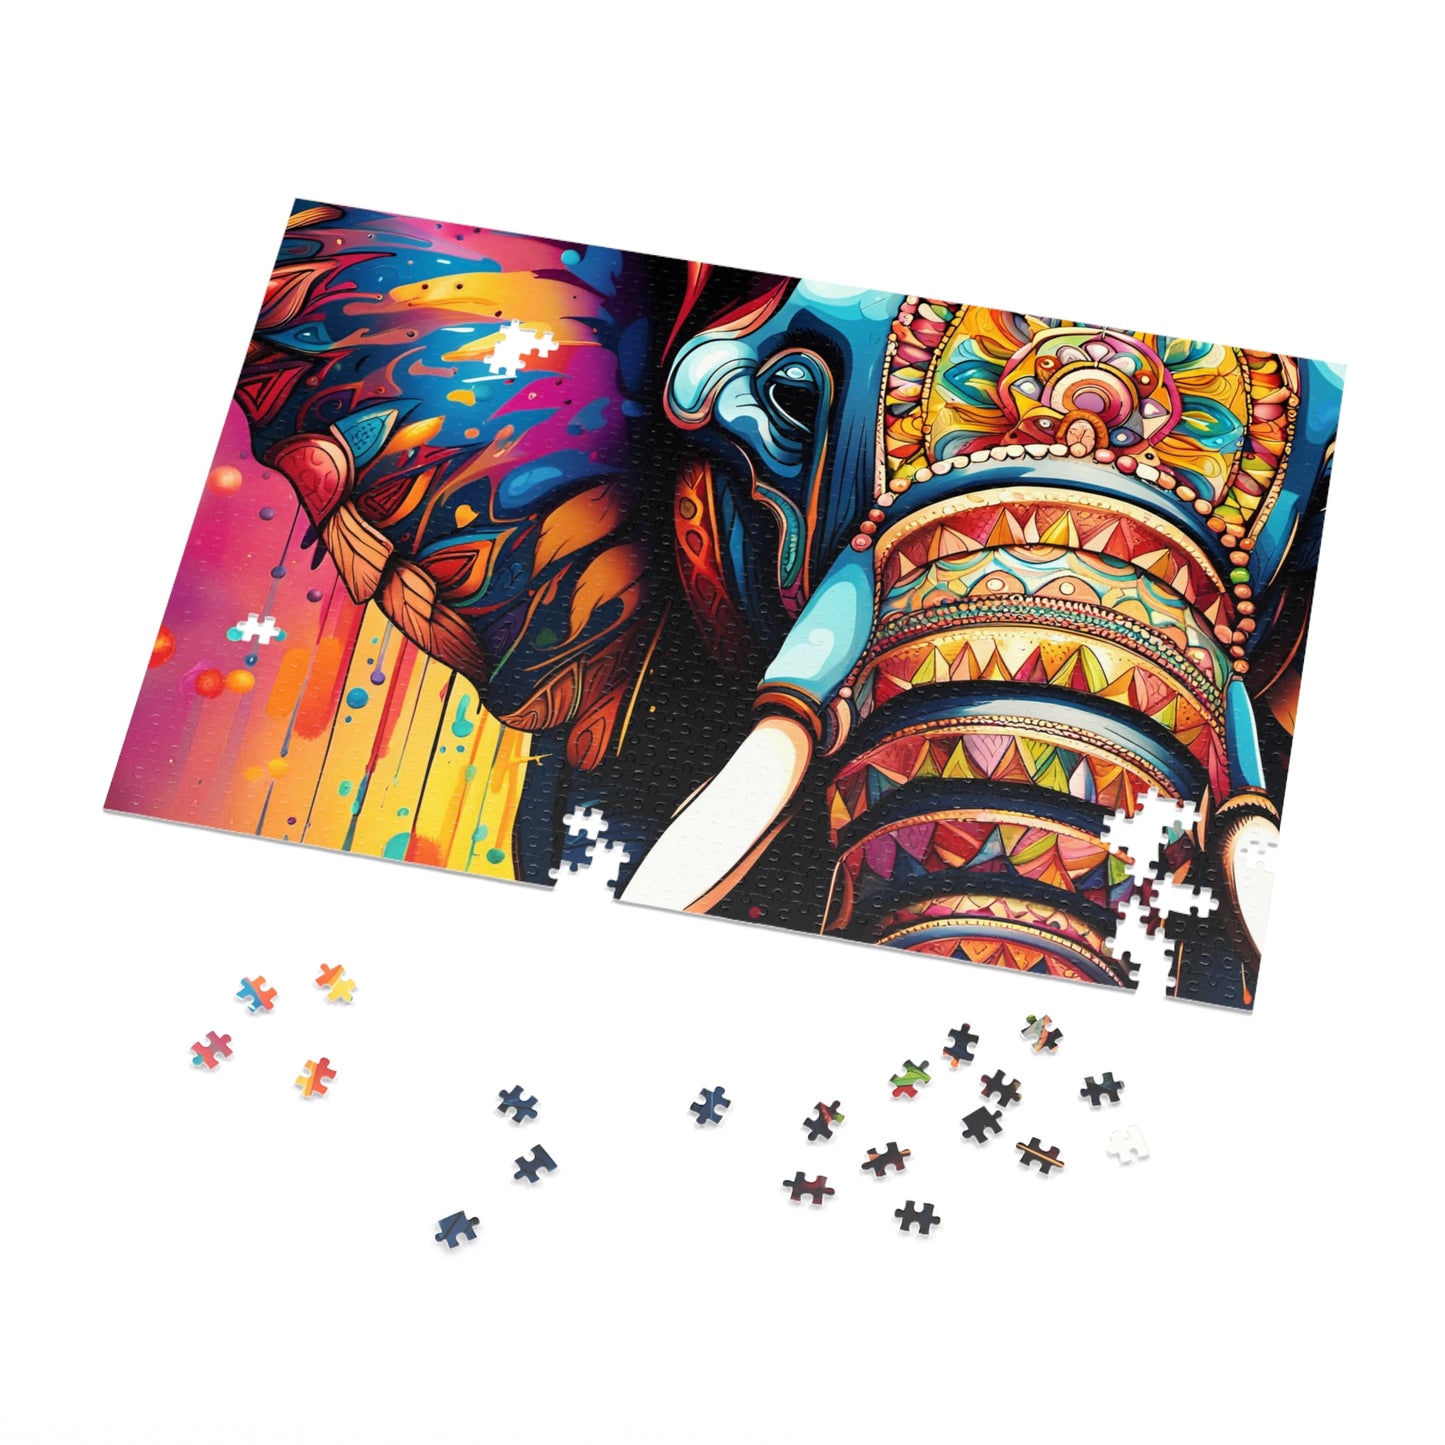 Elephant Themed Jigsaw Puzzle - Stunning Multicolor Mandala Elephant Head Print on 1000 Pieces Puzzle in progress